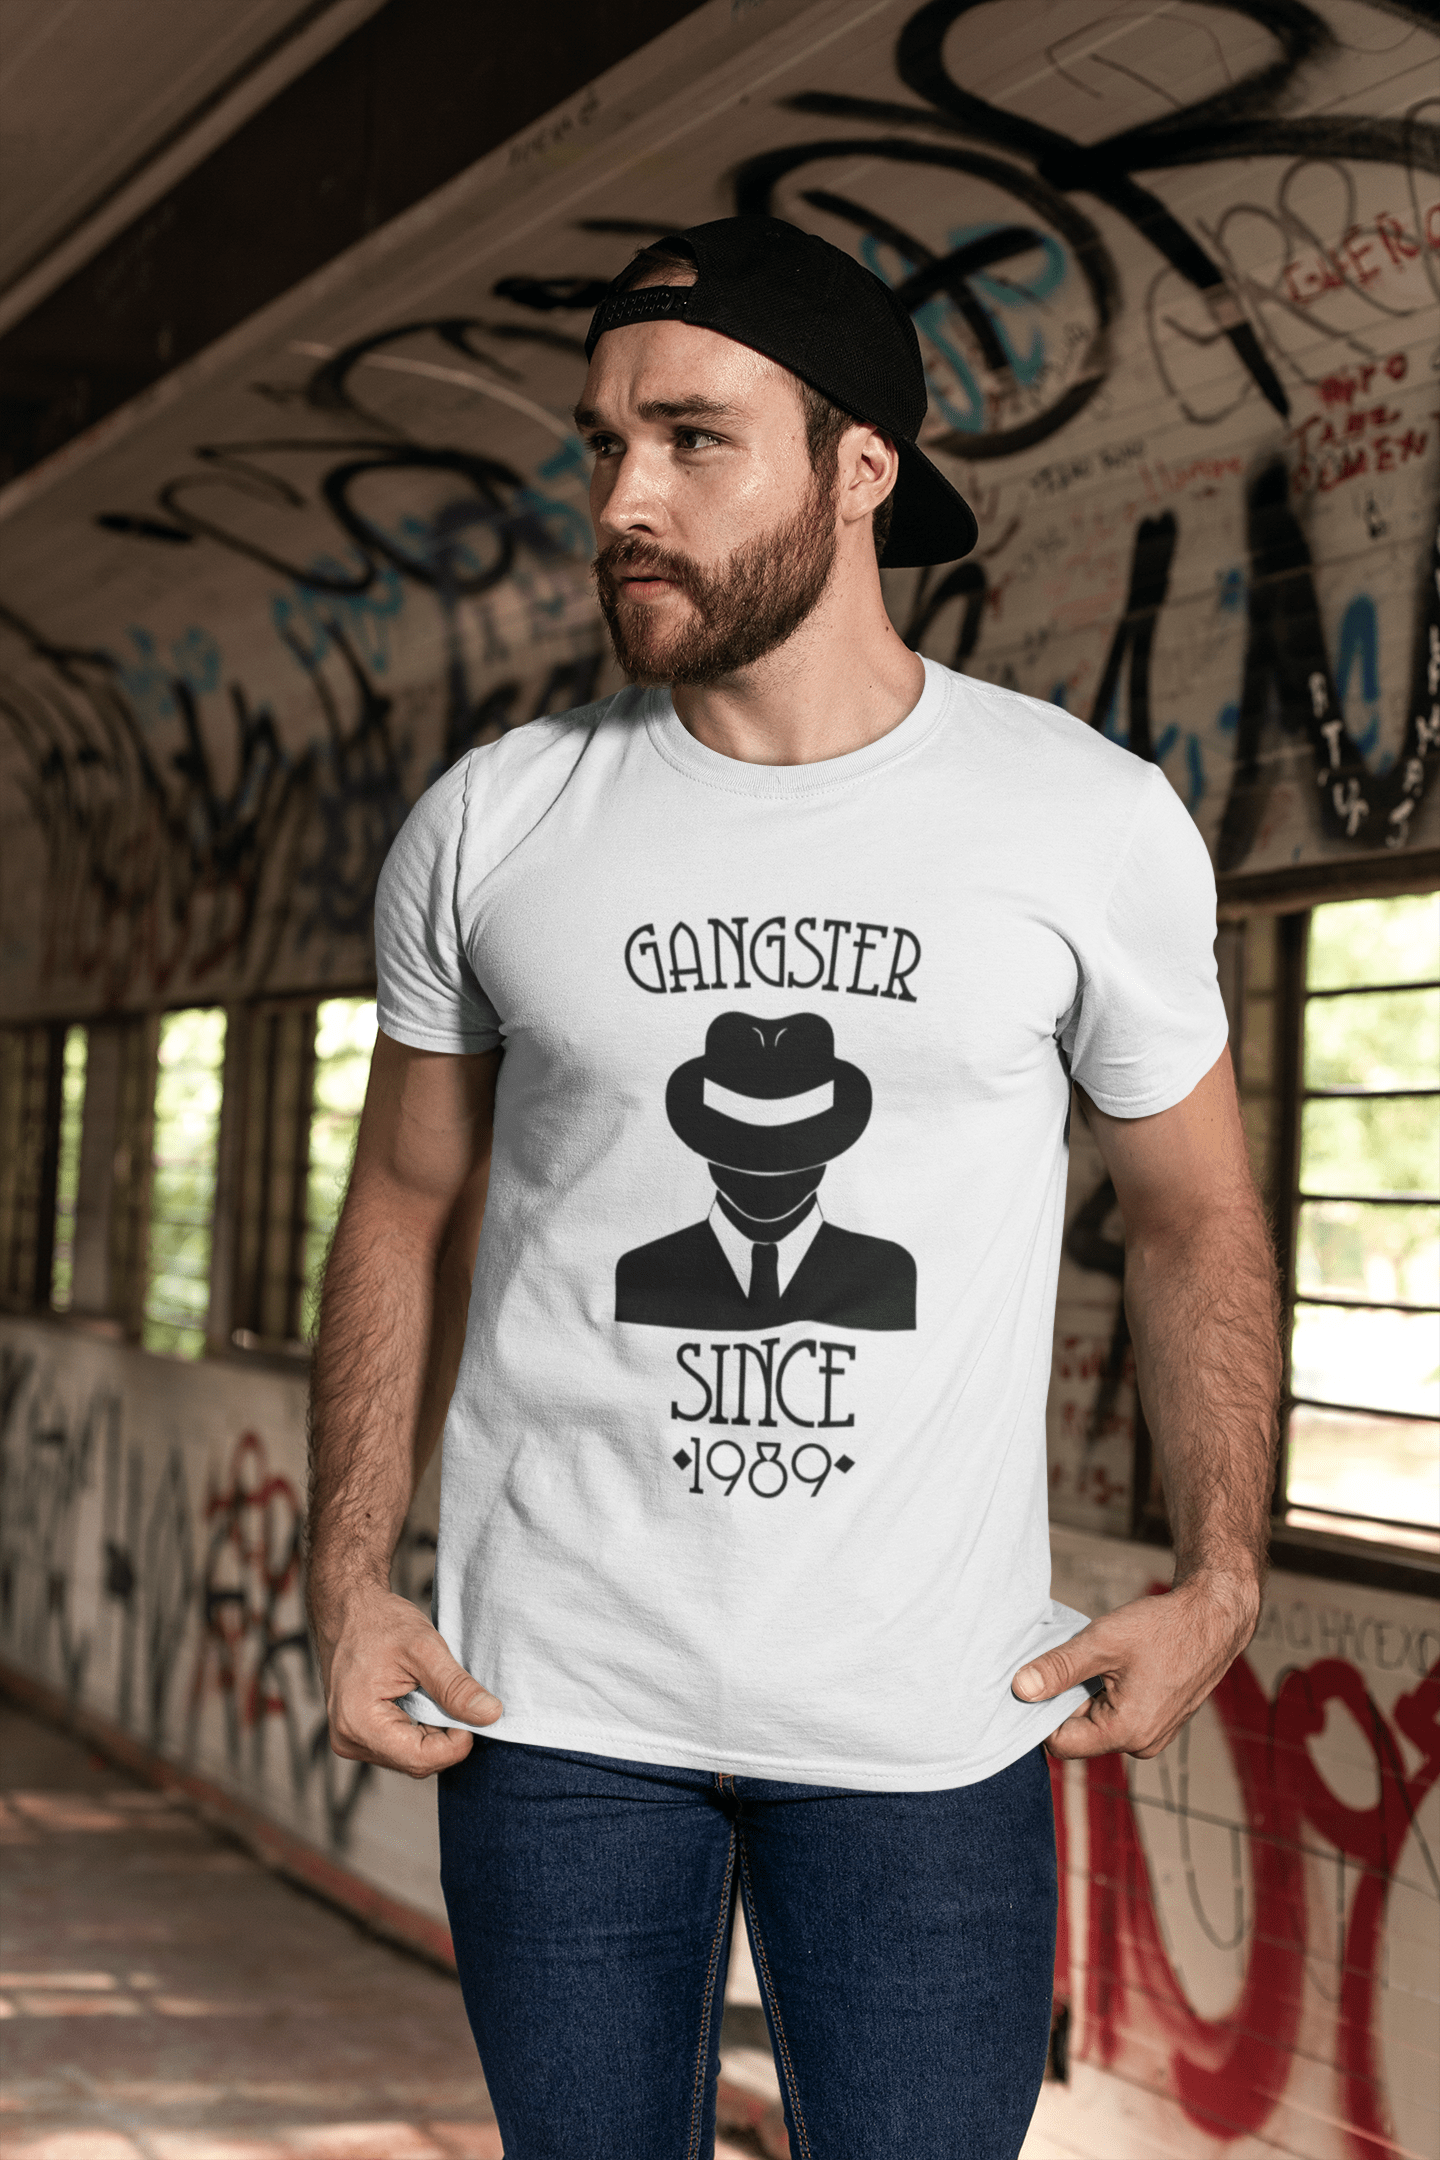 Gangster 1989, Men's Short Sleeve Round Neck T-shirt 00125